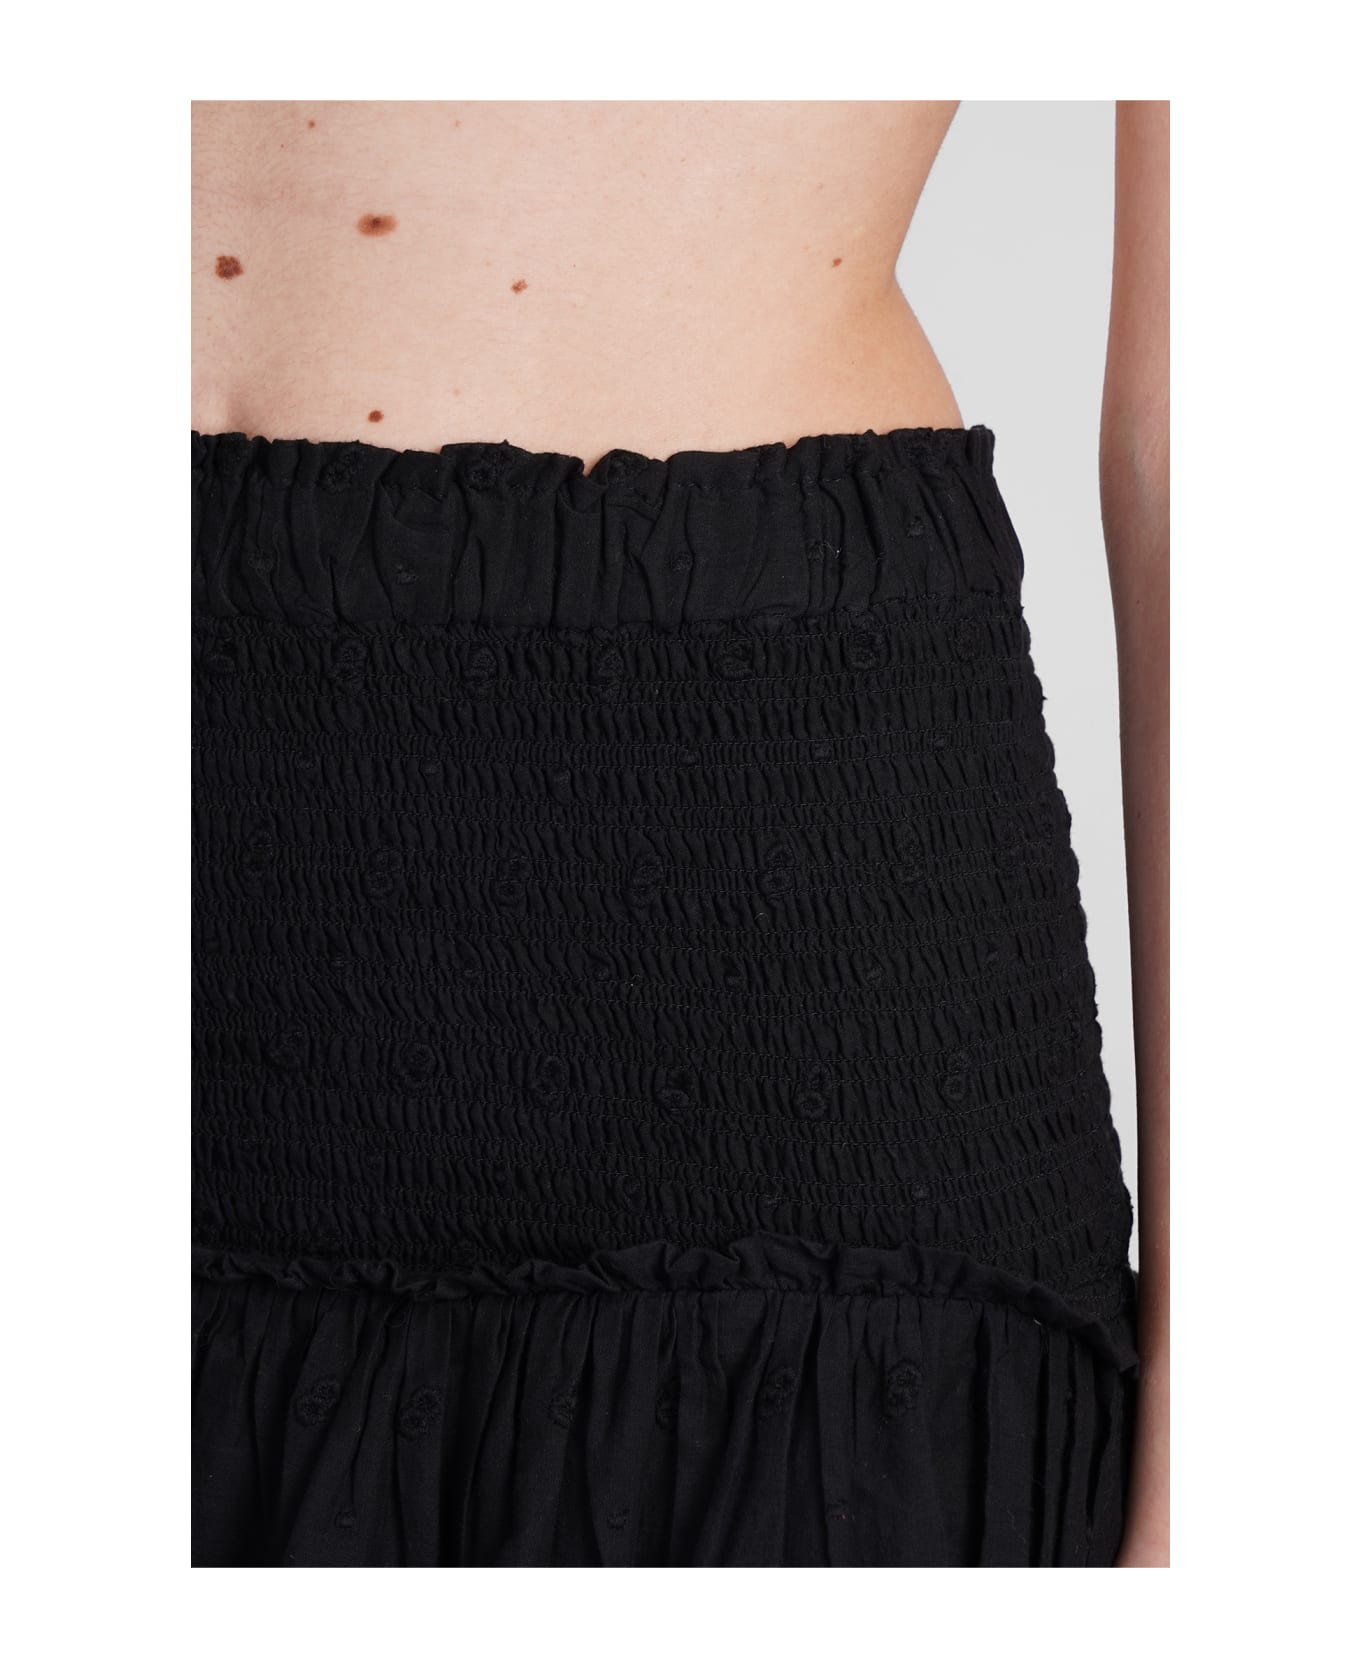 Marant Étoile Tinaomi Skirt - black スカート